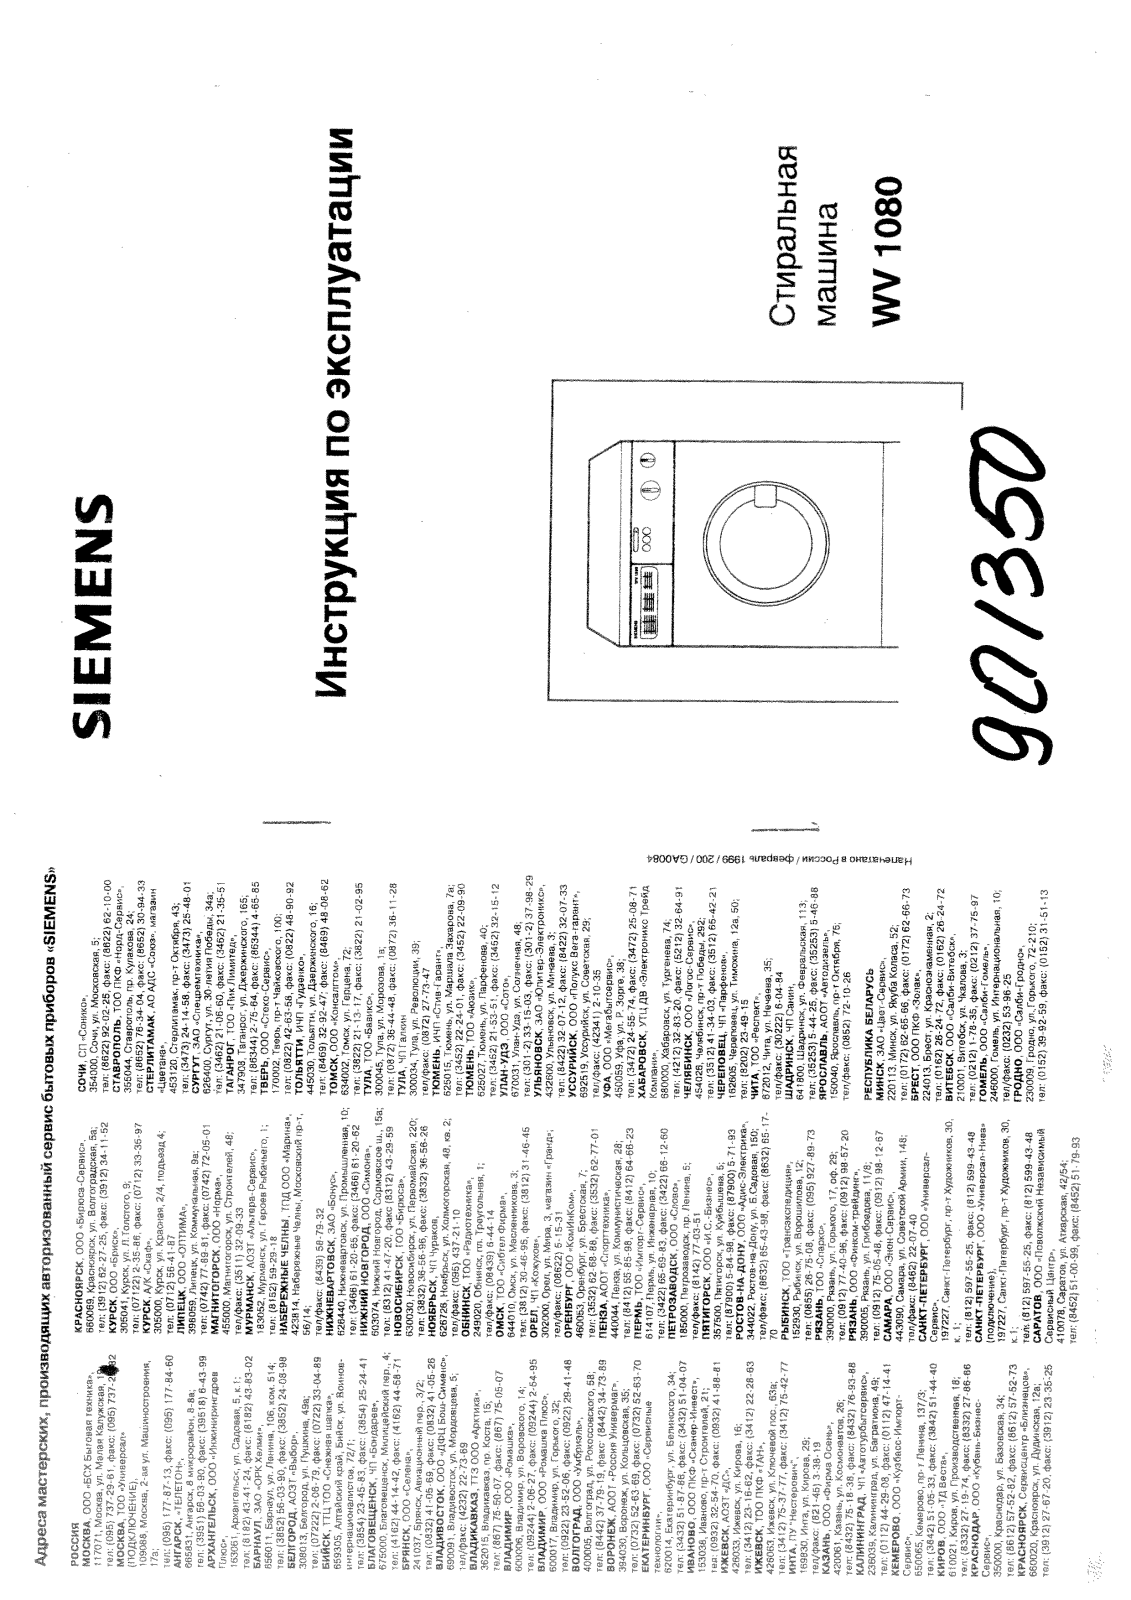 Siemens WV1080 User Manual